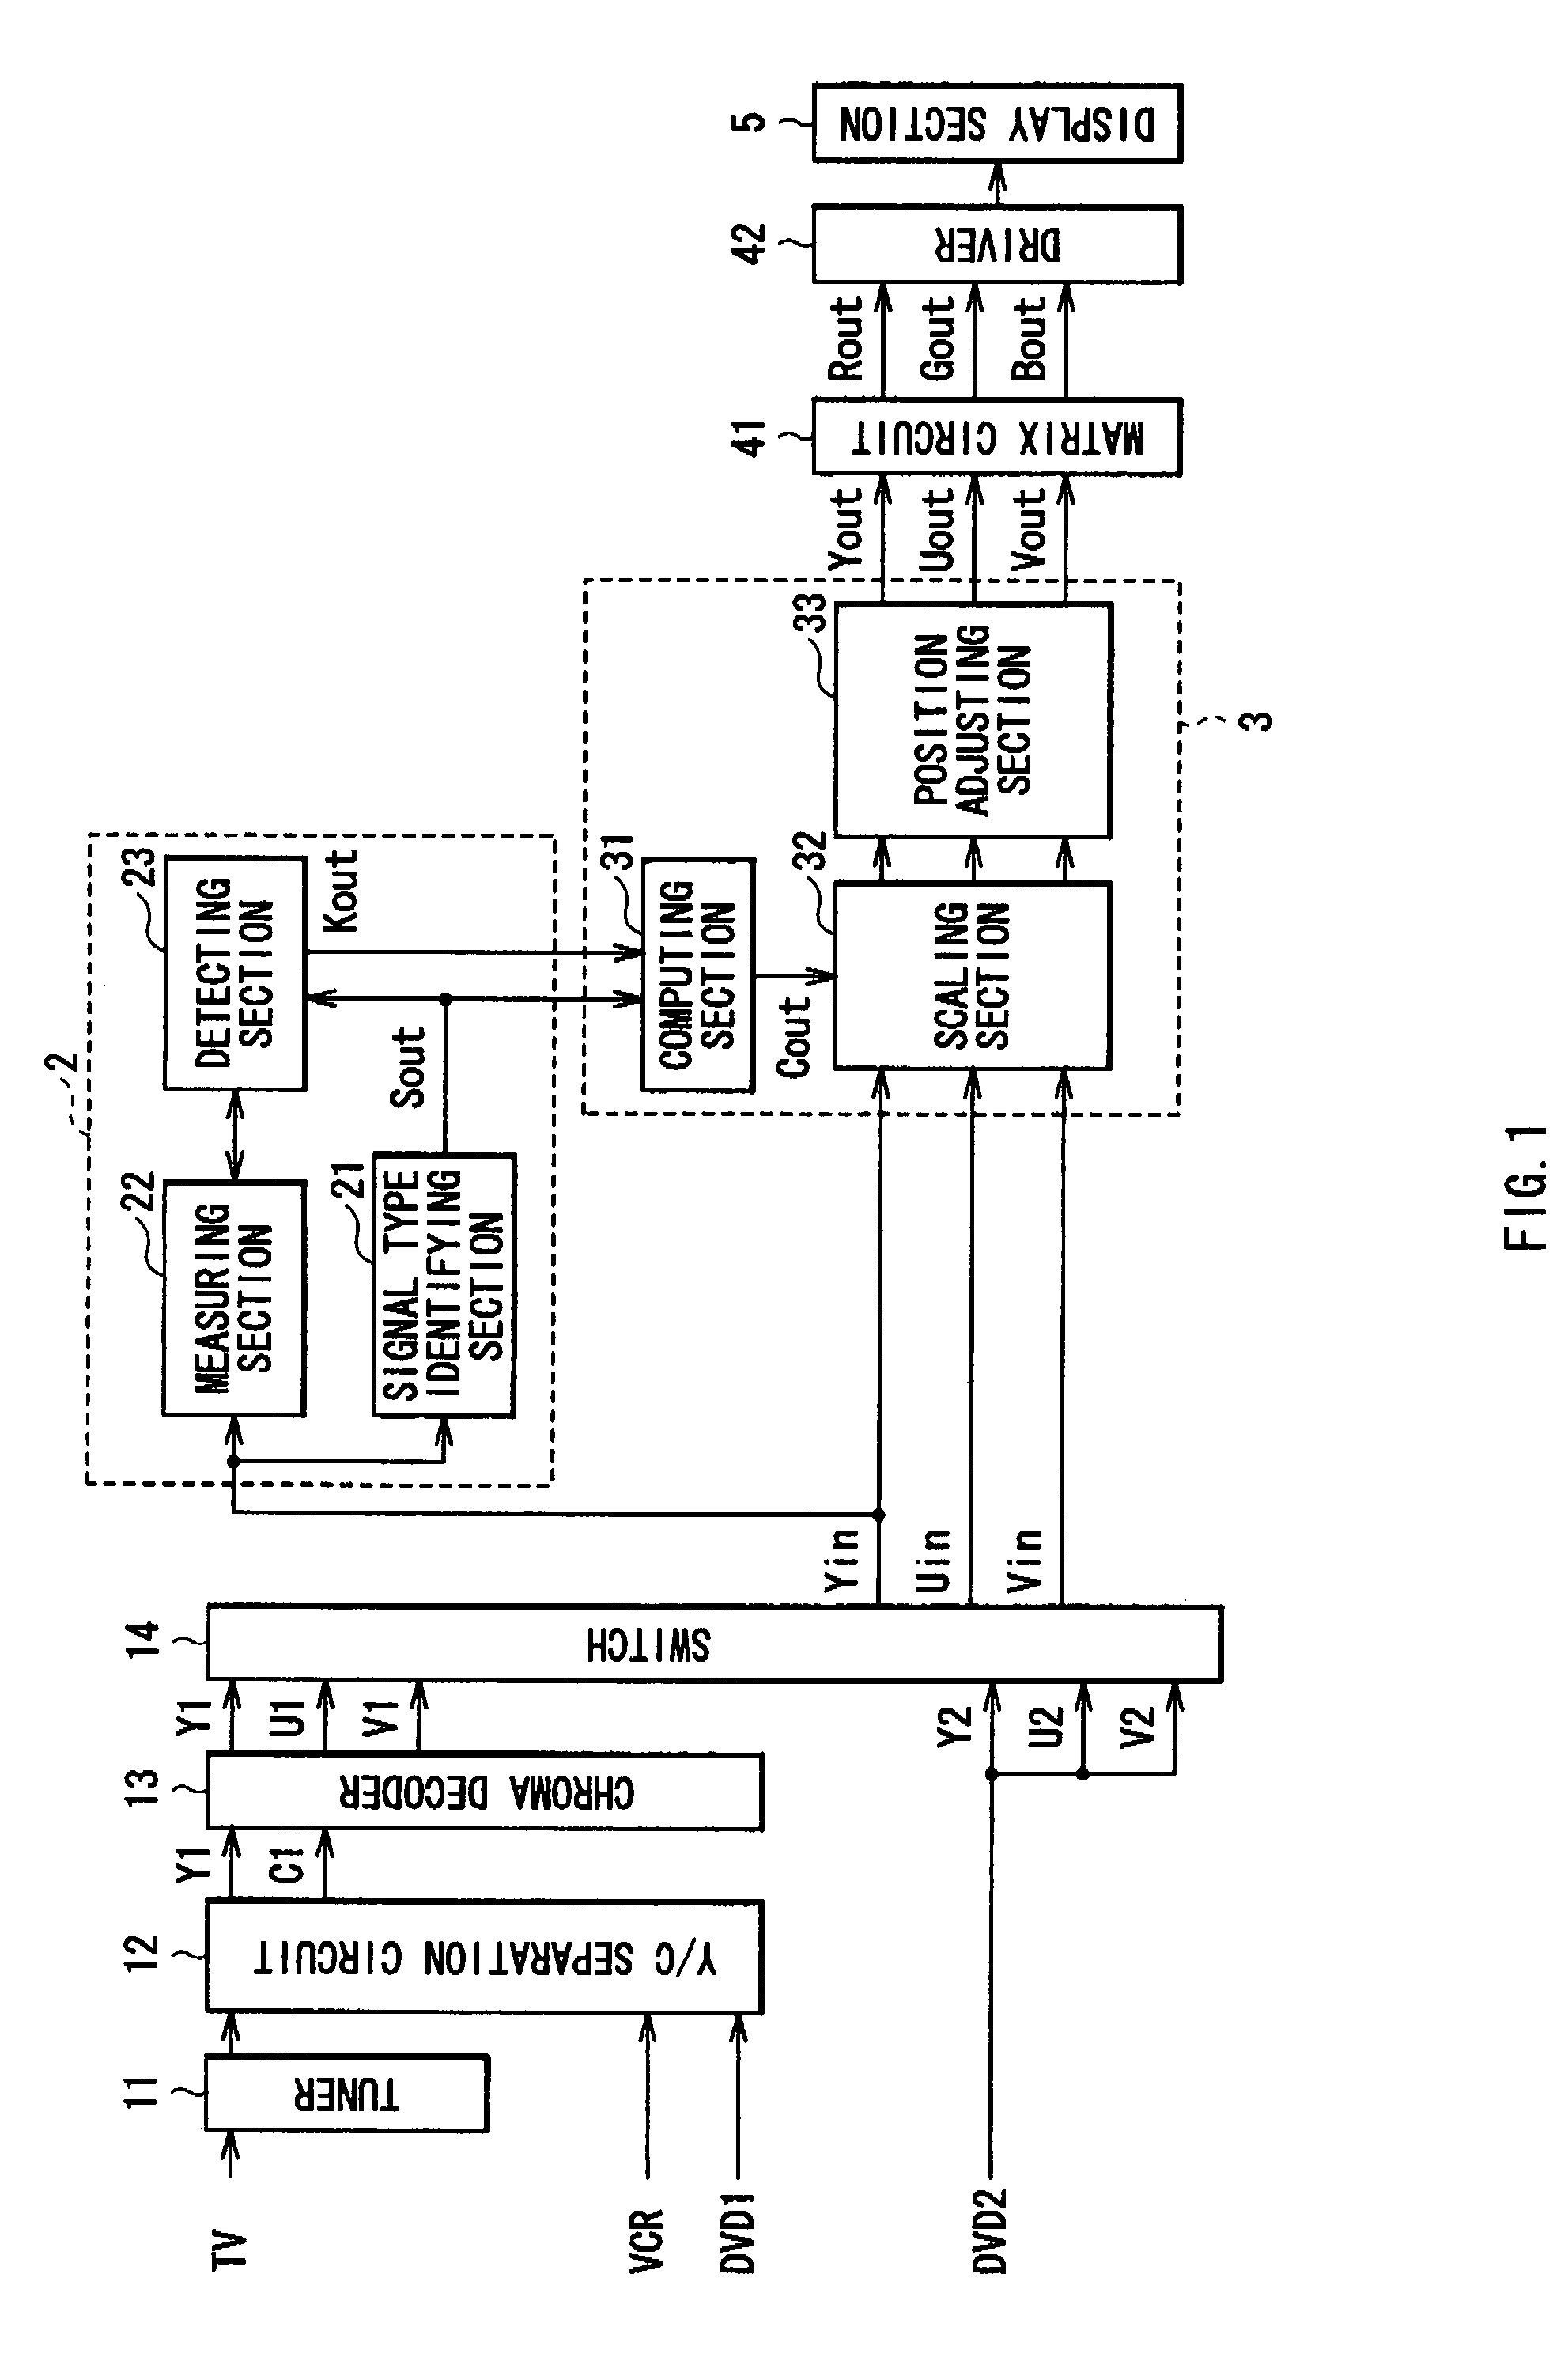 Image signal processing apparatus, image display and image display method